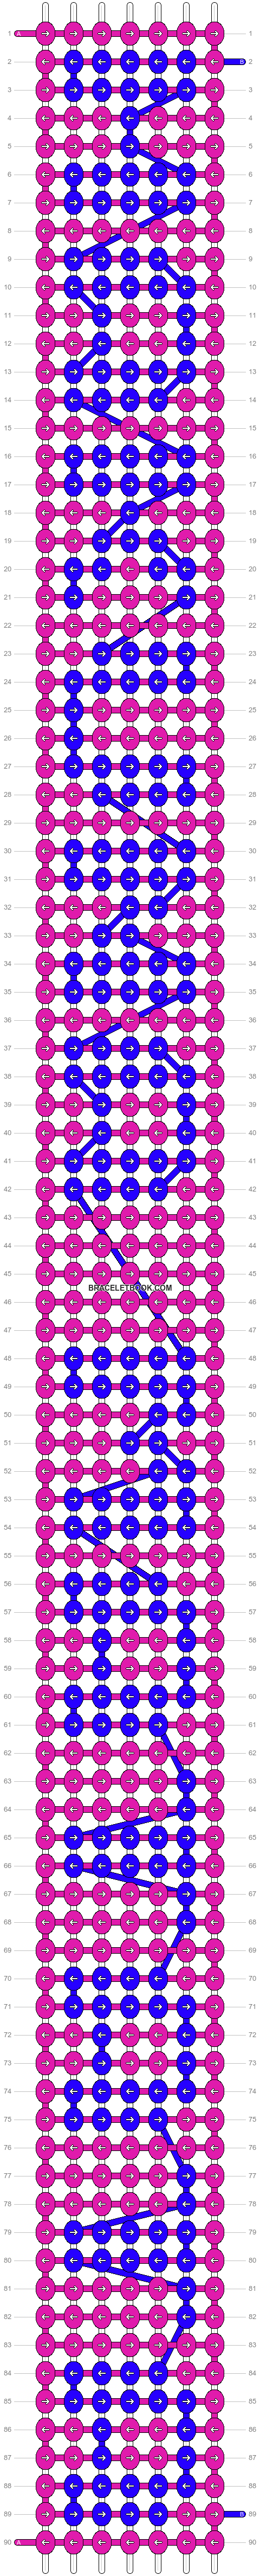 Alpha pattern #5986 variation #27940 pattern